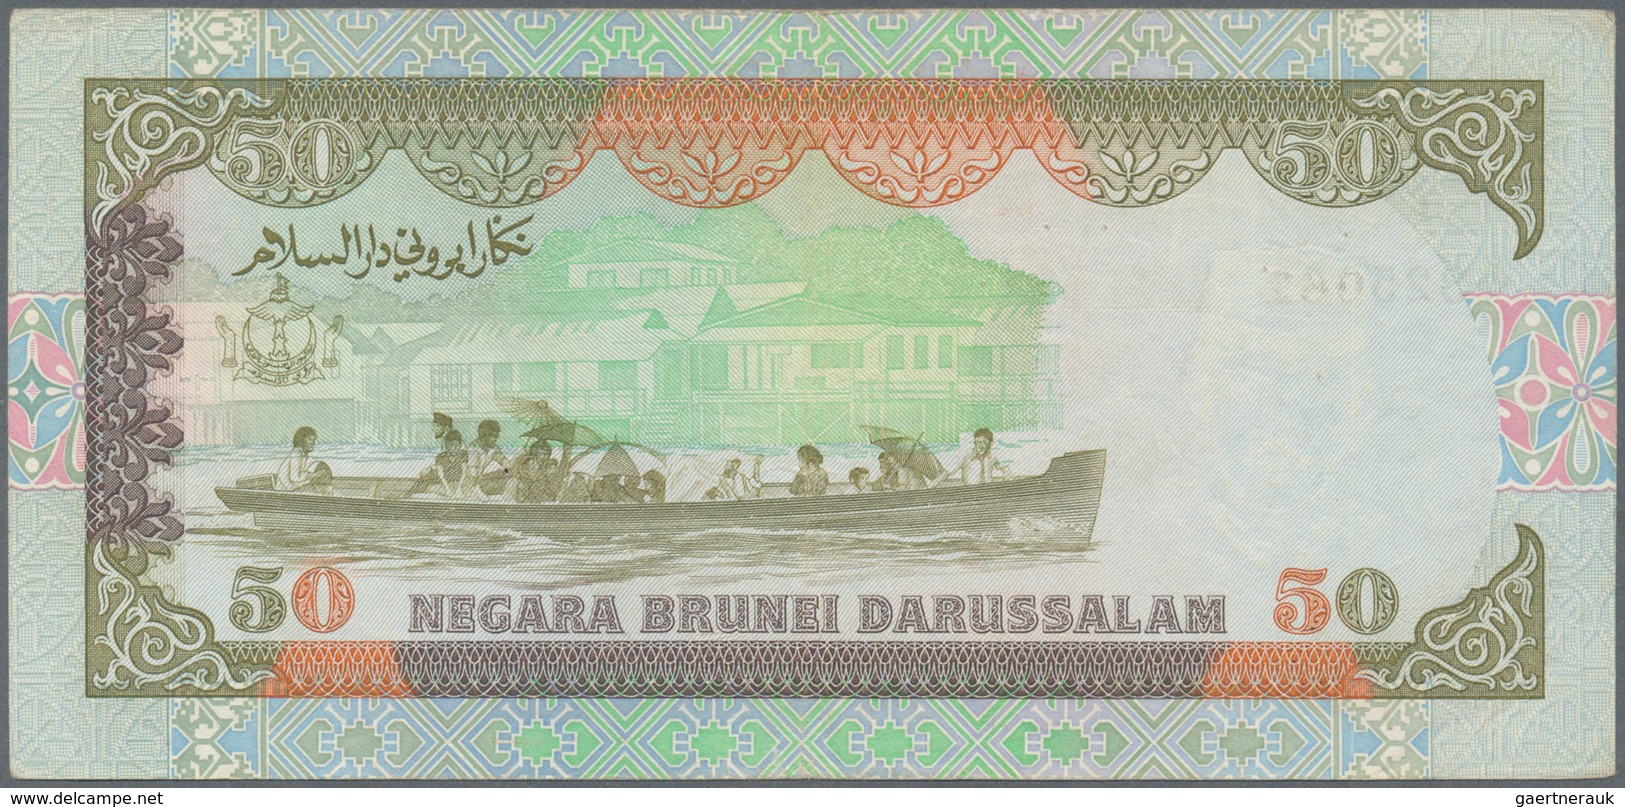 01189 Brunei: 50 Ringgit P. 16 Used But With Error Print, Missing Signature Titles And Signatures At Cente - Brunei